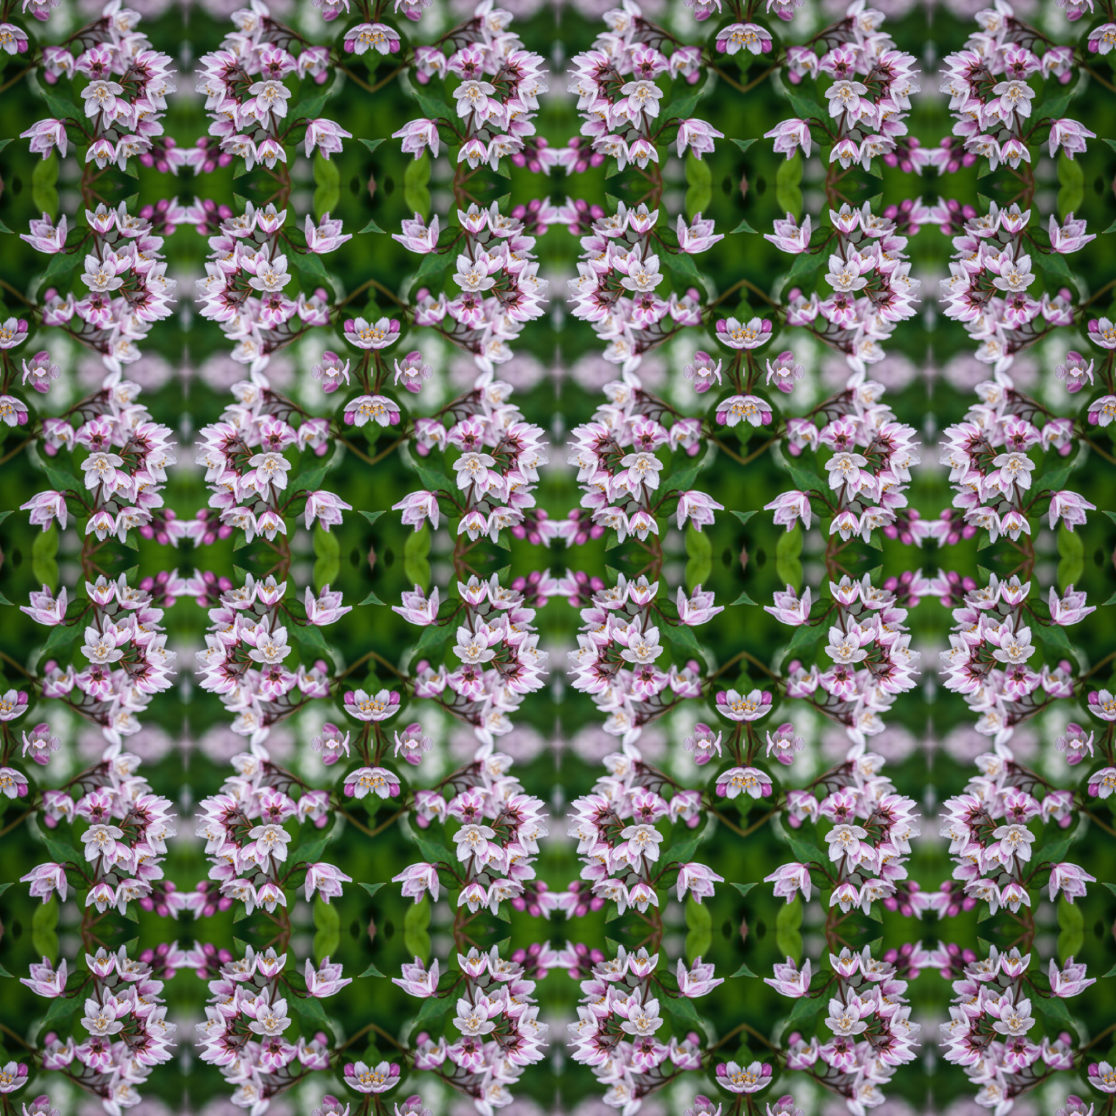 Matthias Maier | Geometrix | Small Blossoms – 02